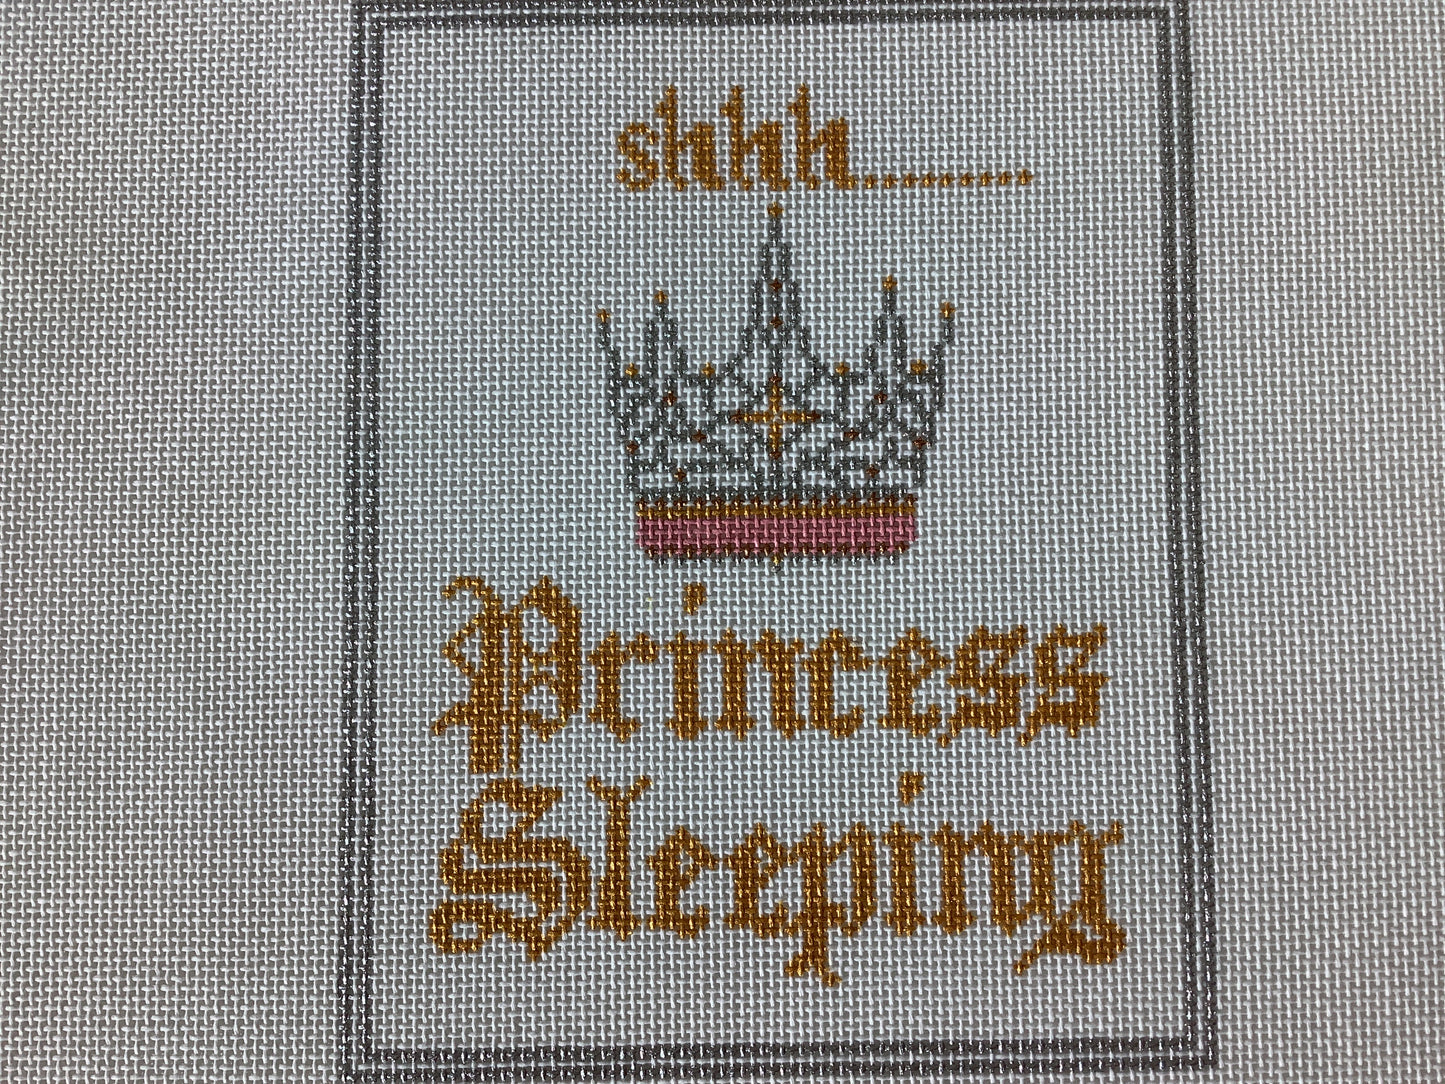 Sign - Shhh...Princess Sleeping Needlecraft Canvas